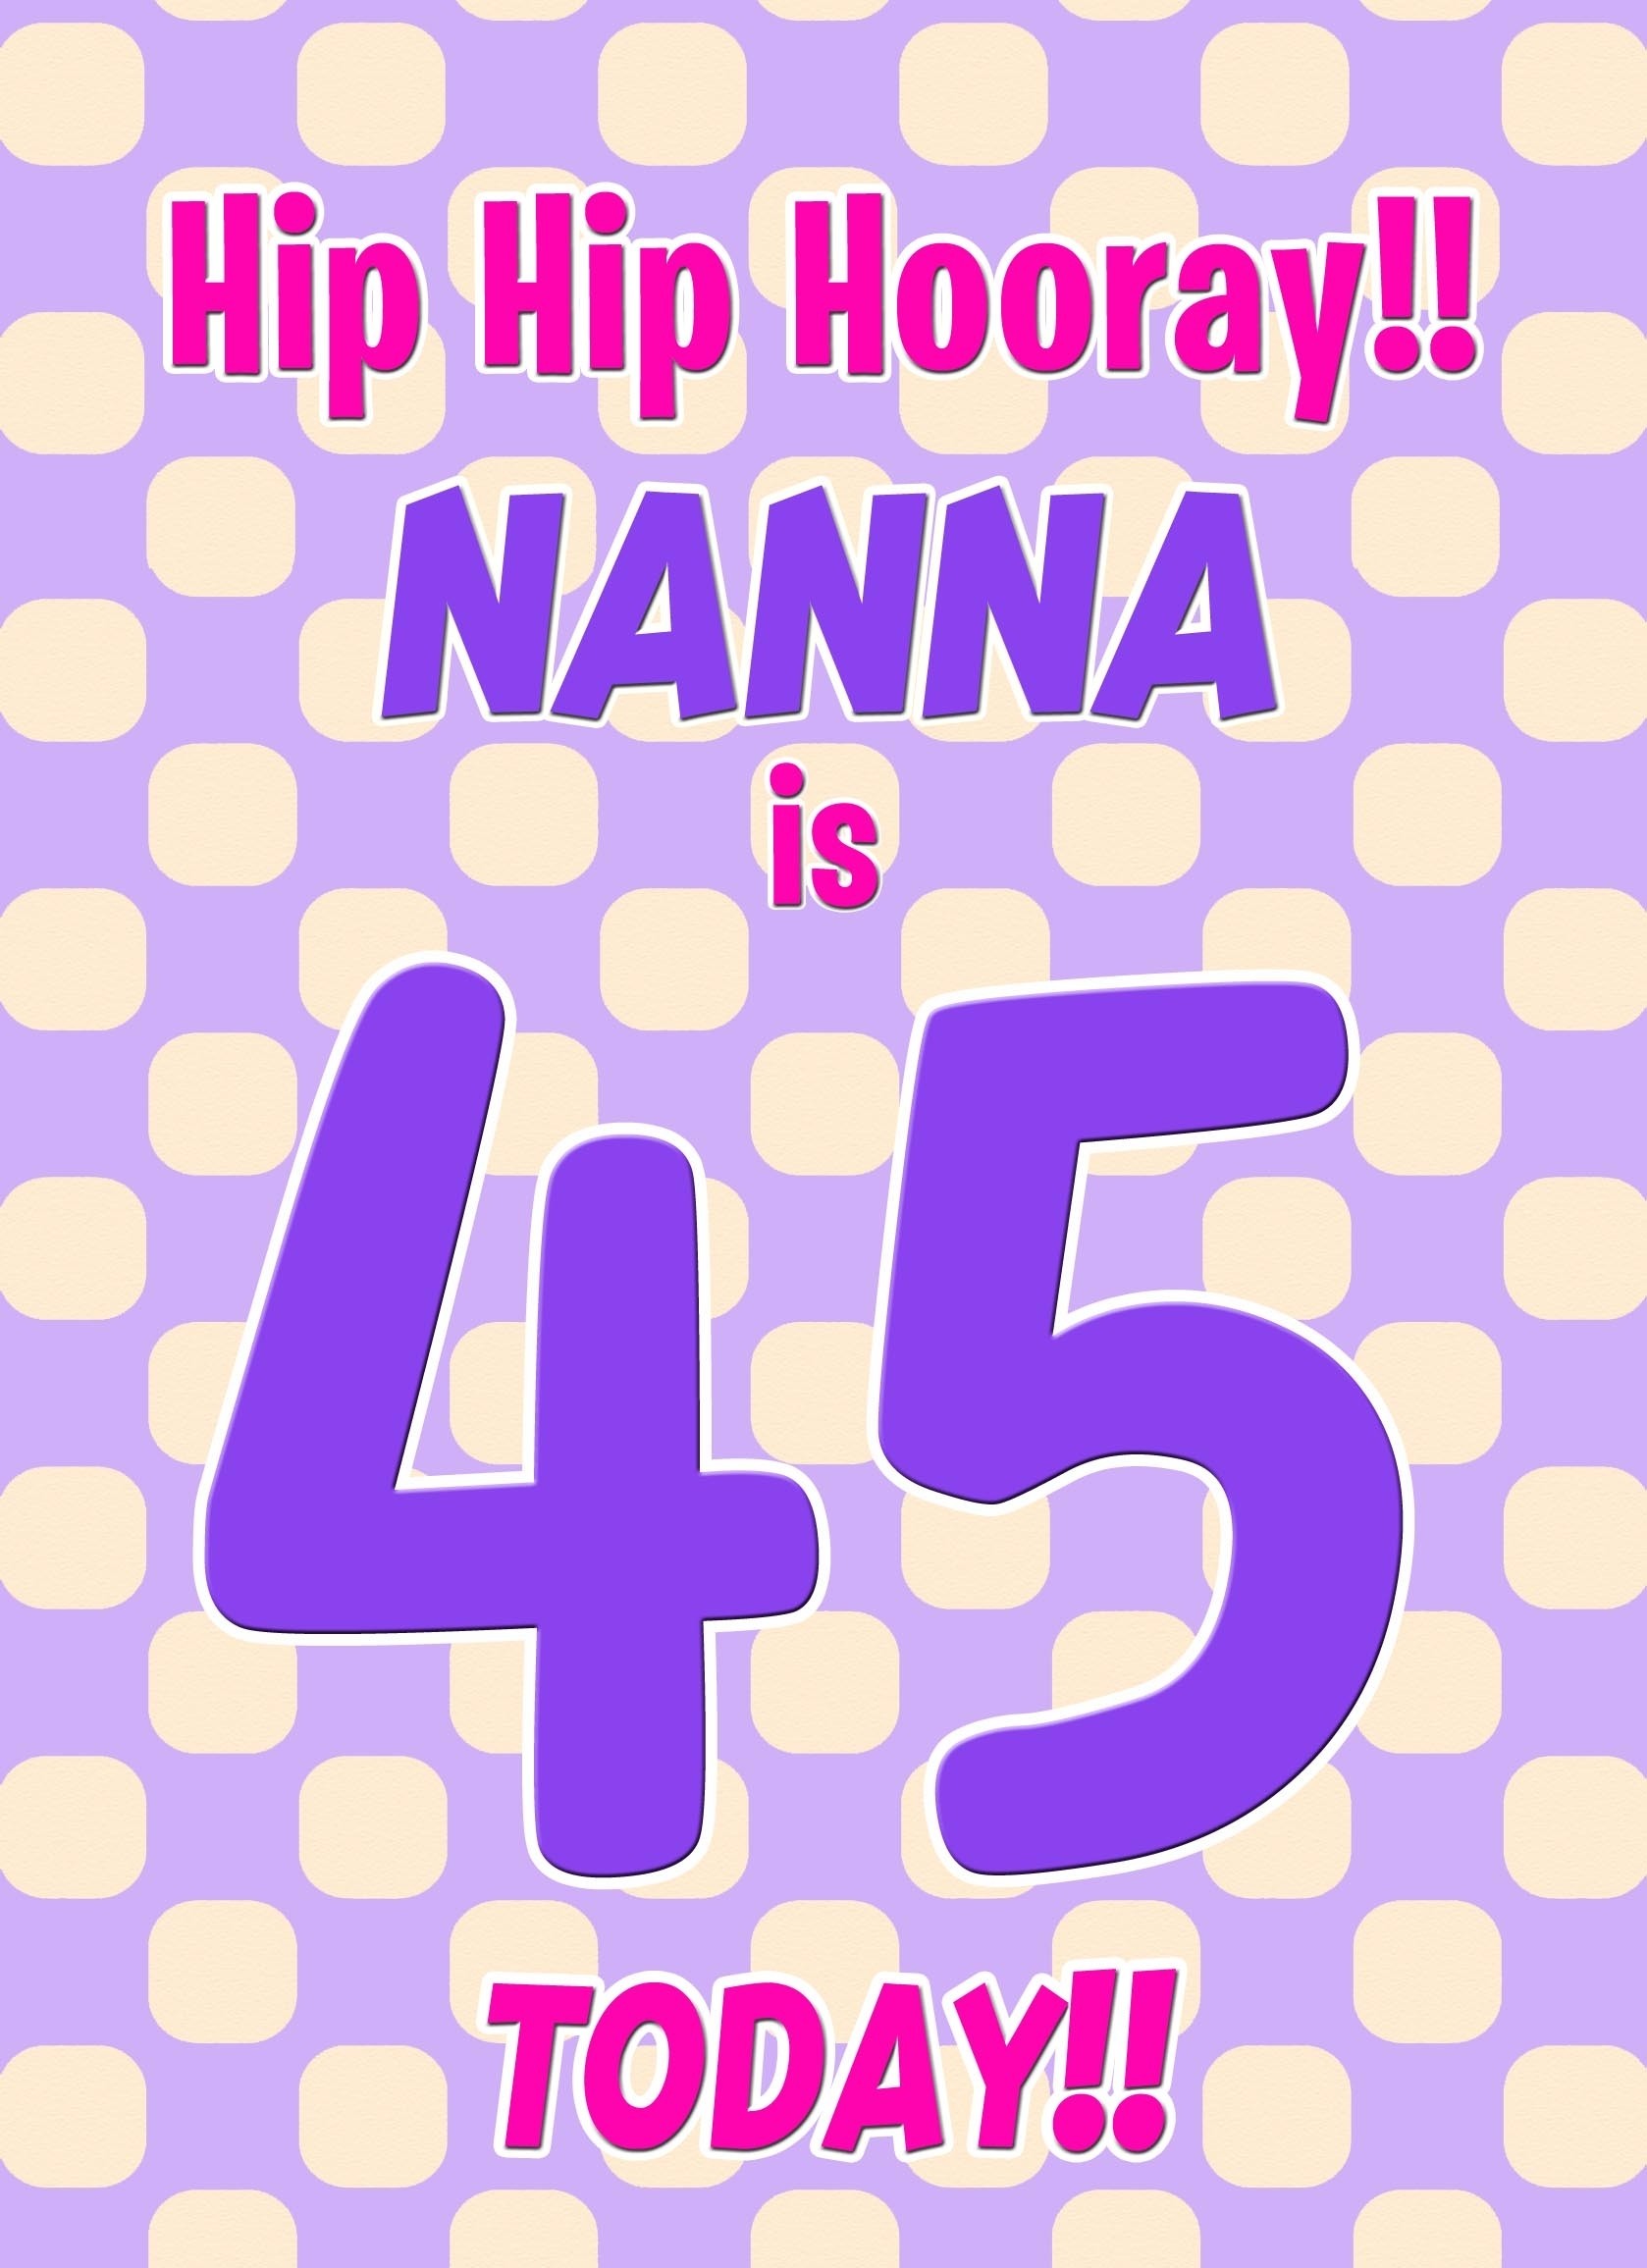 Nanna 45th Birthday Card (Purple Spots)